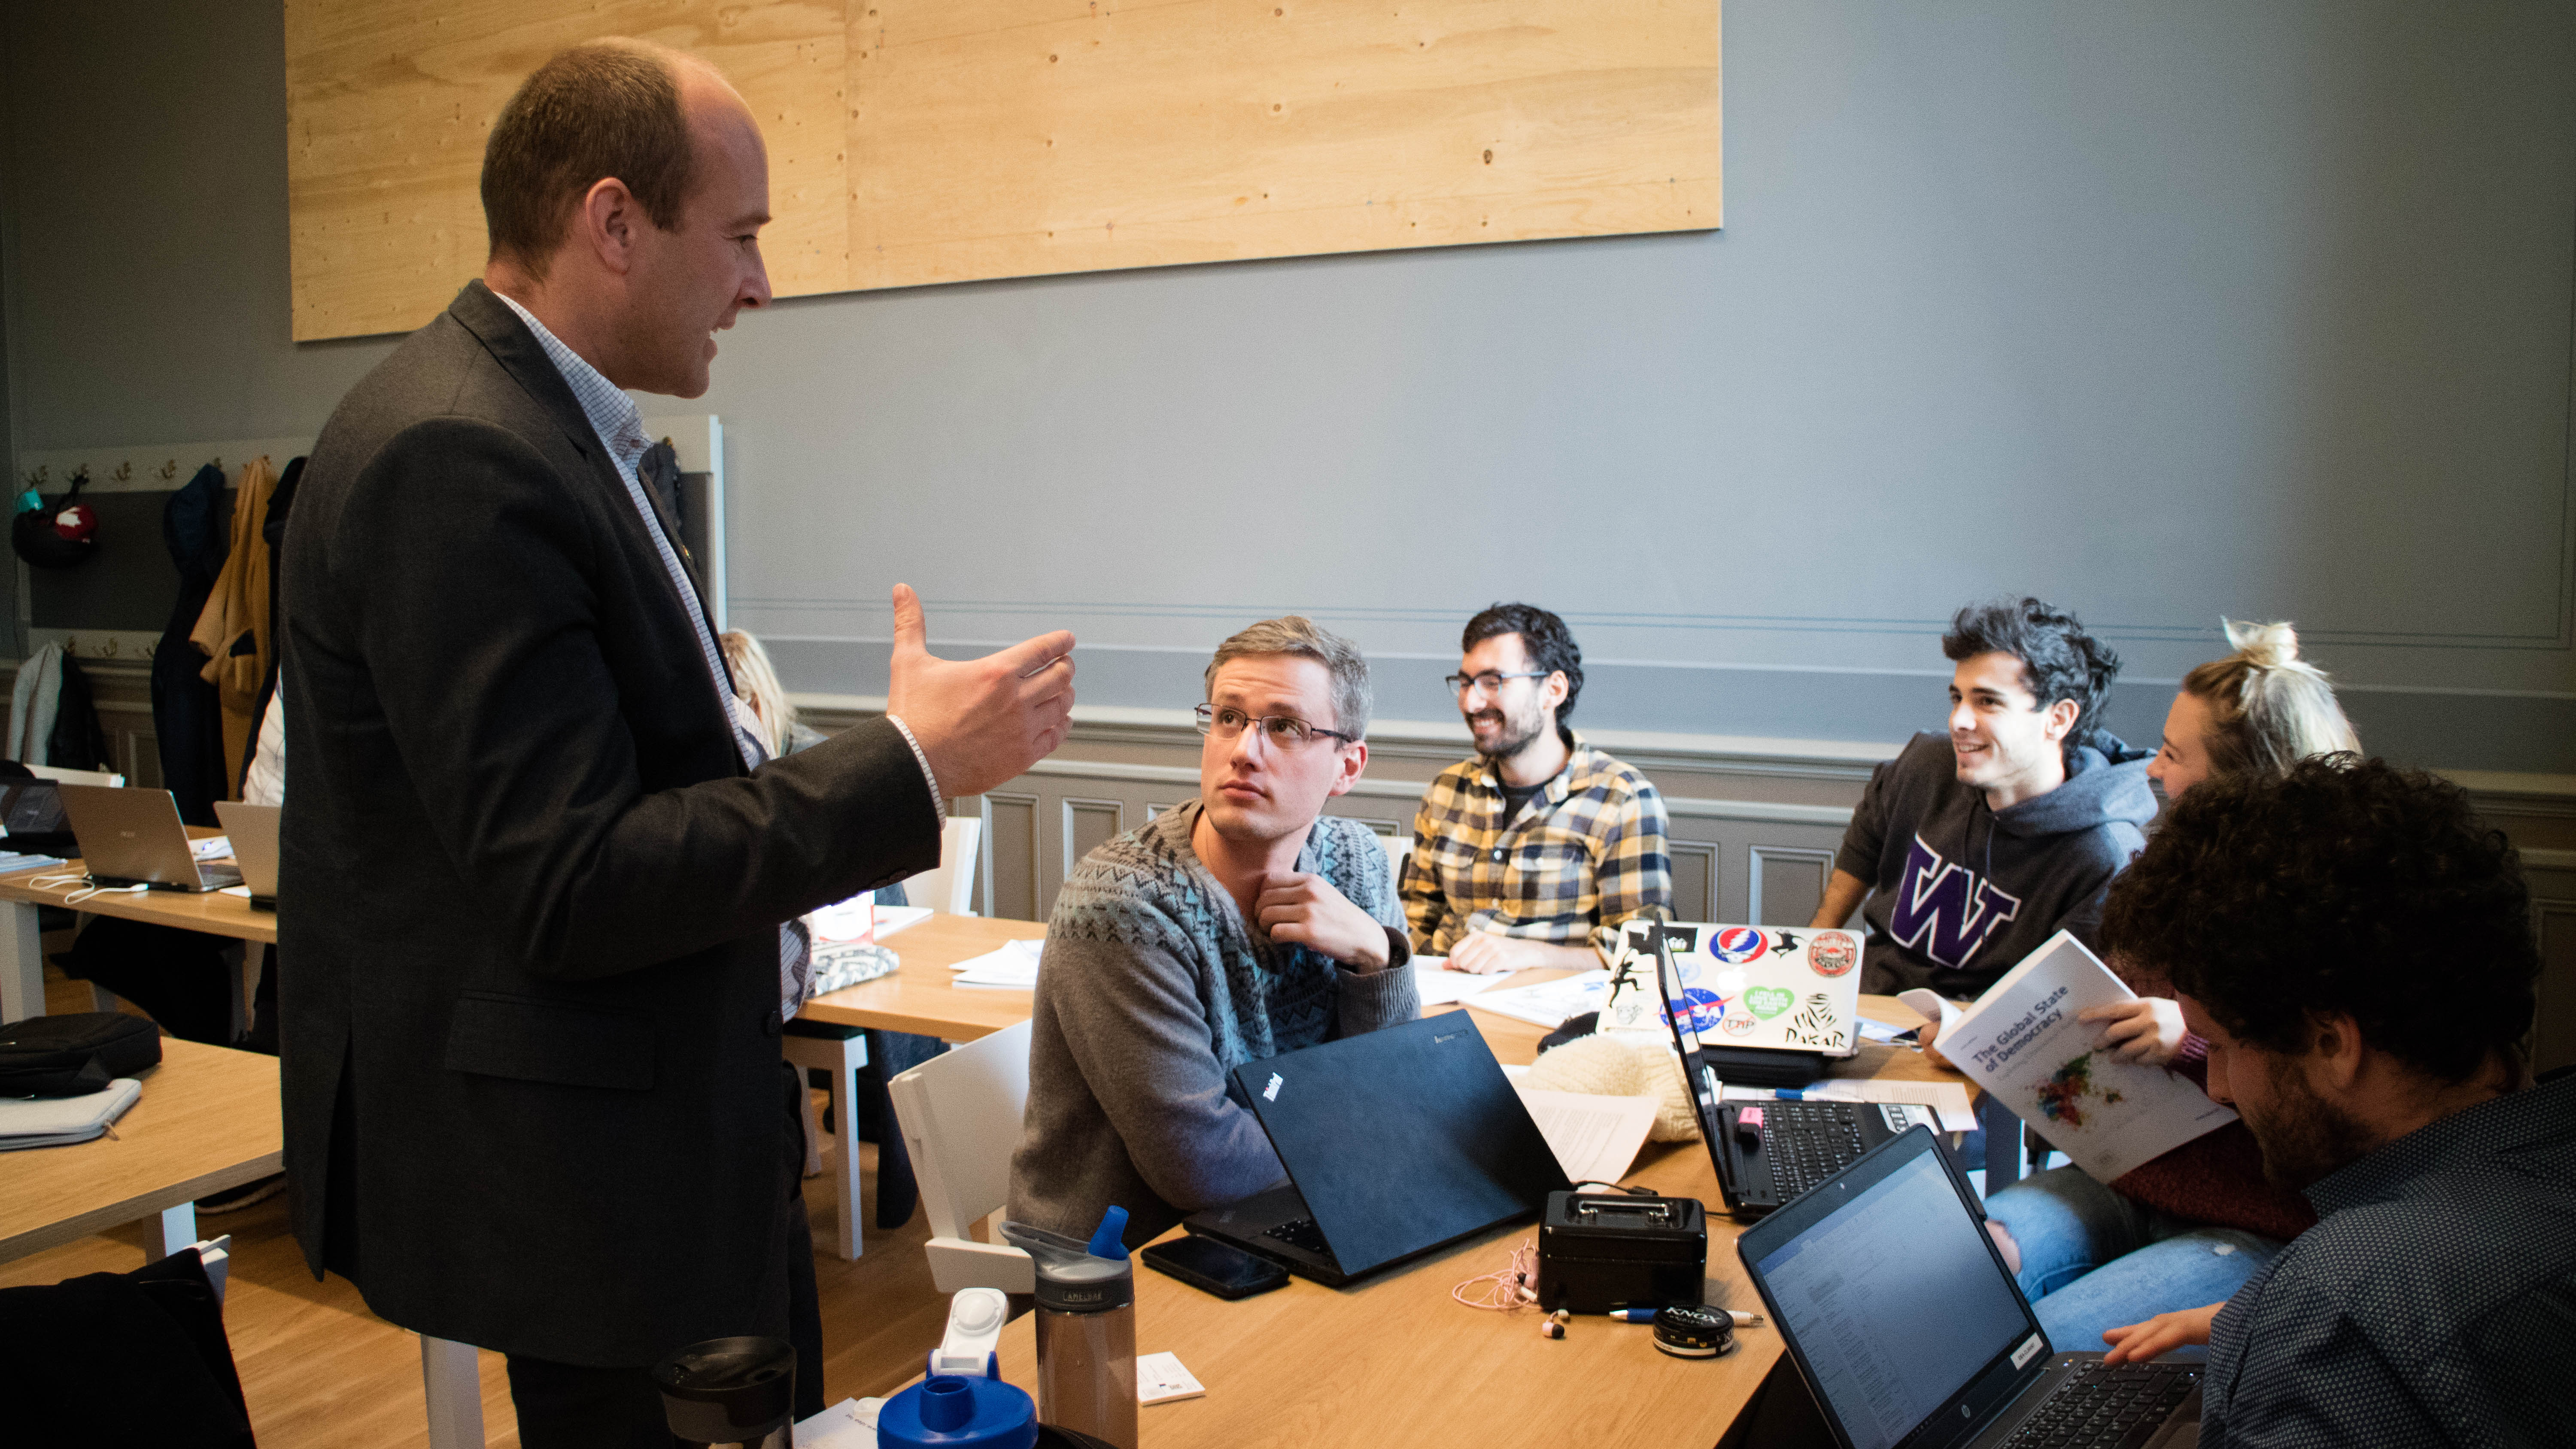 Professor Svend-Erik Skaaning discussing the GSoD Indicies with students at Uppsala University, 16 November. Image: International IDEA